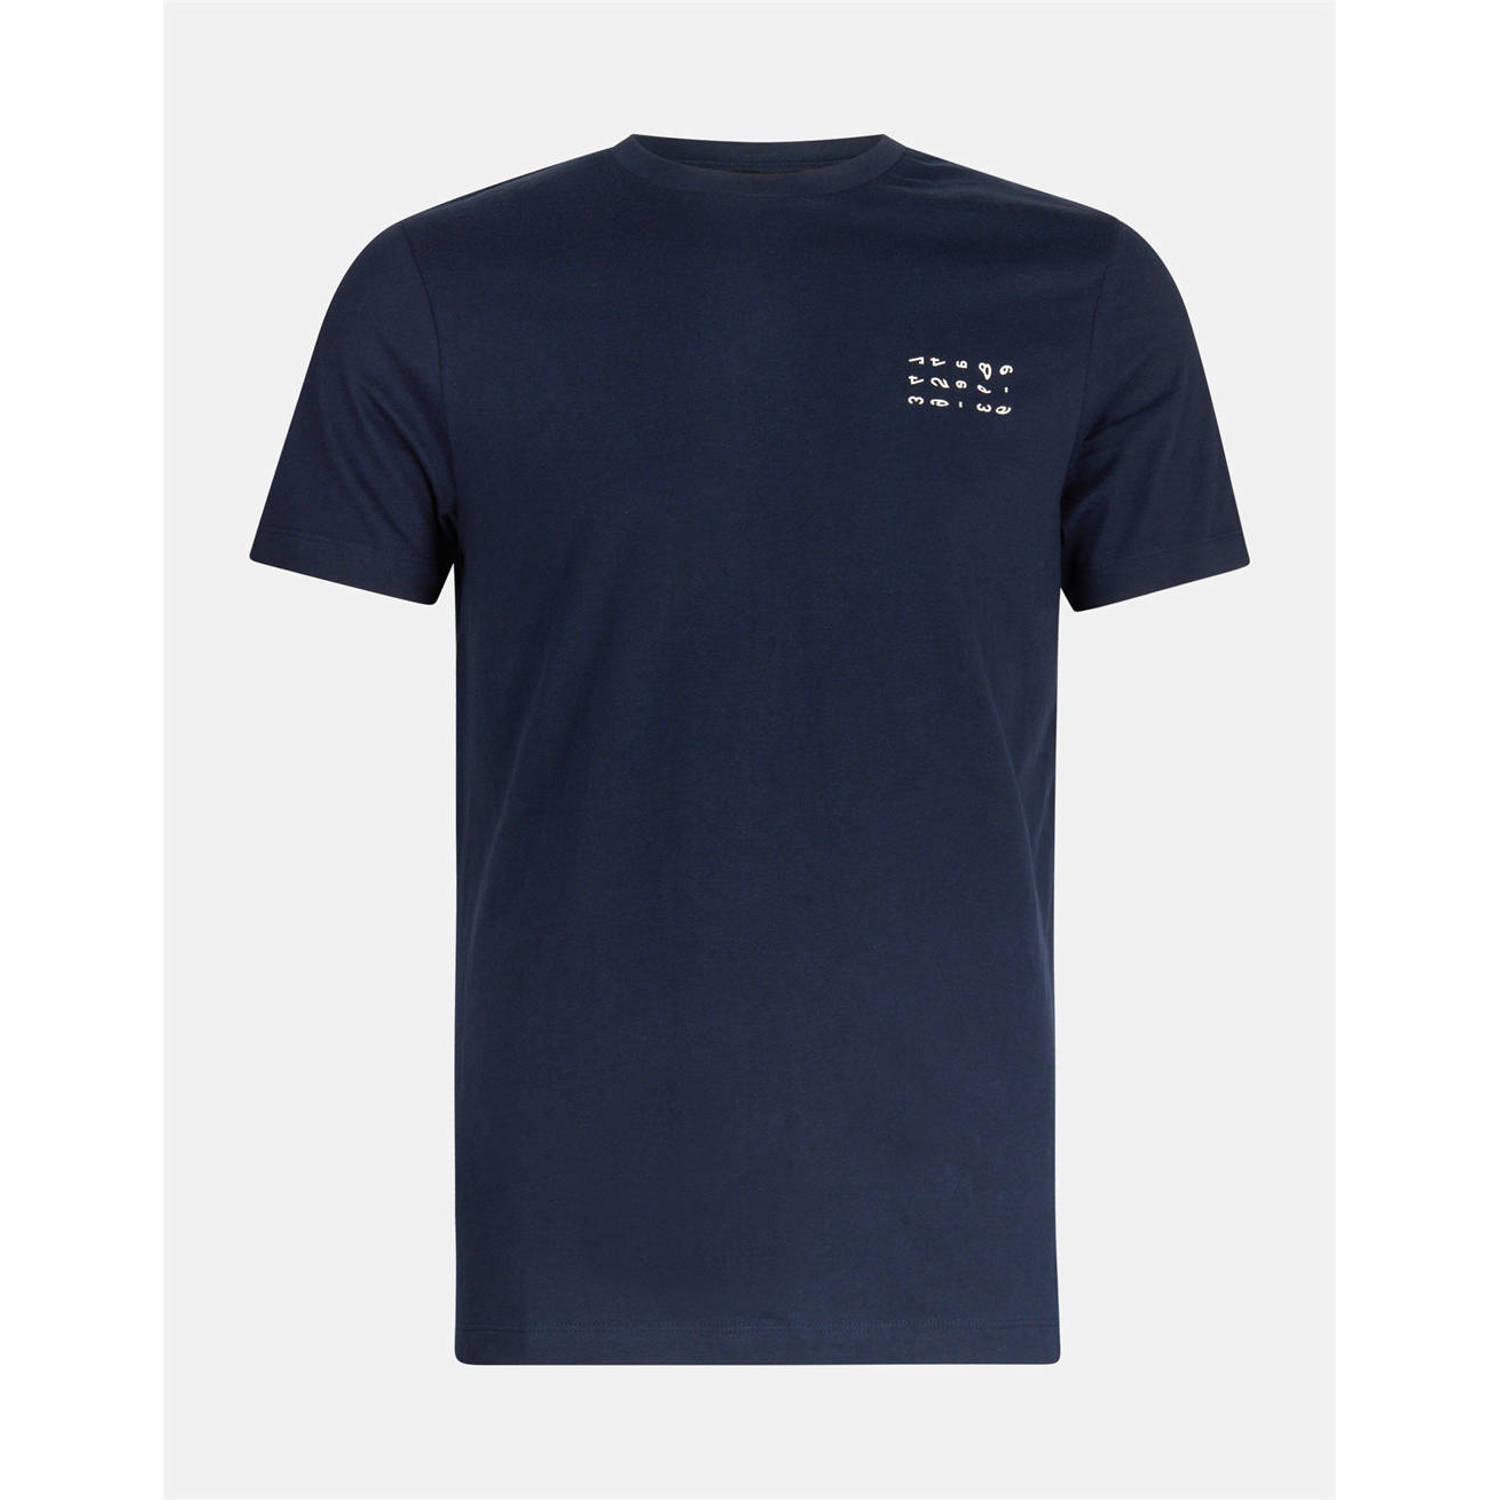 Shoeby T-shirt met printopdruk navy